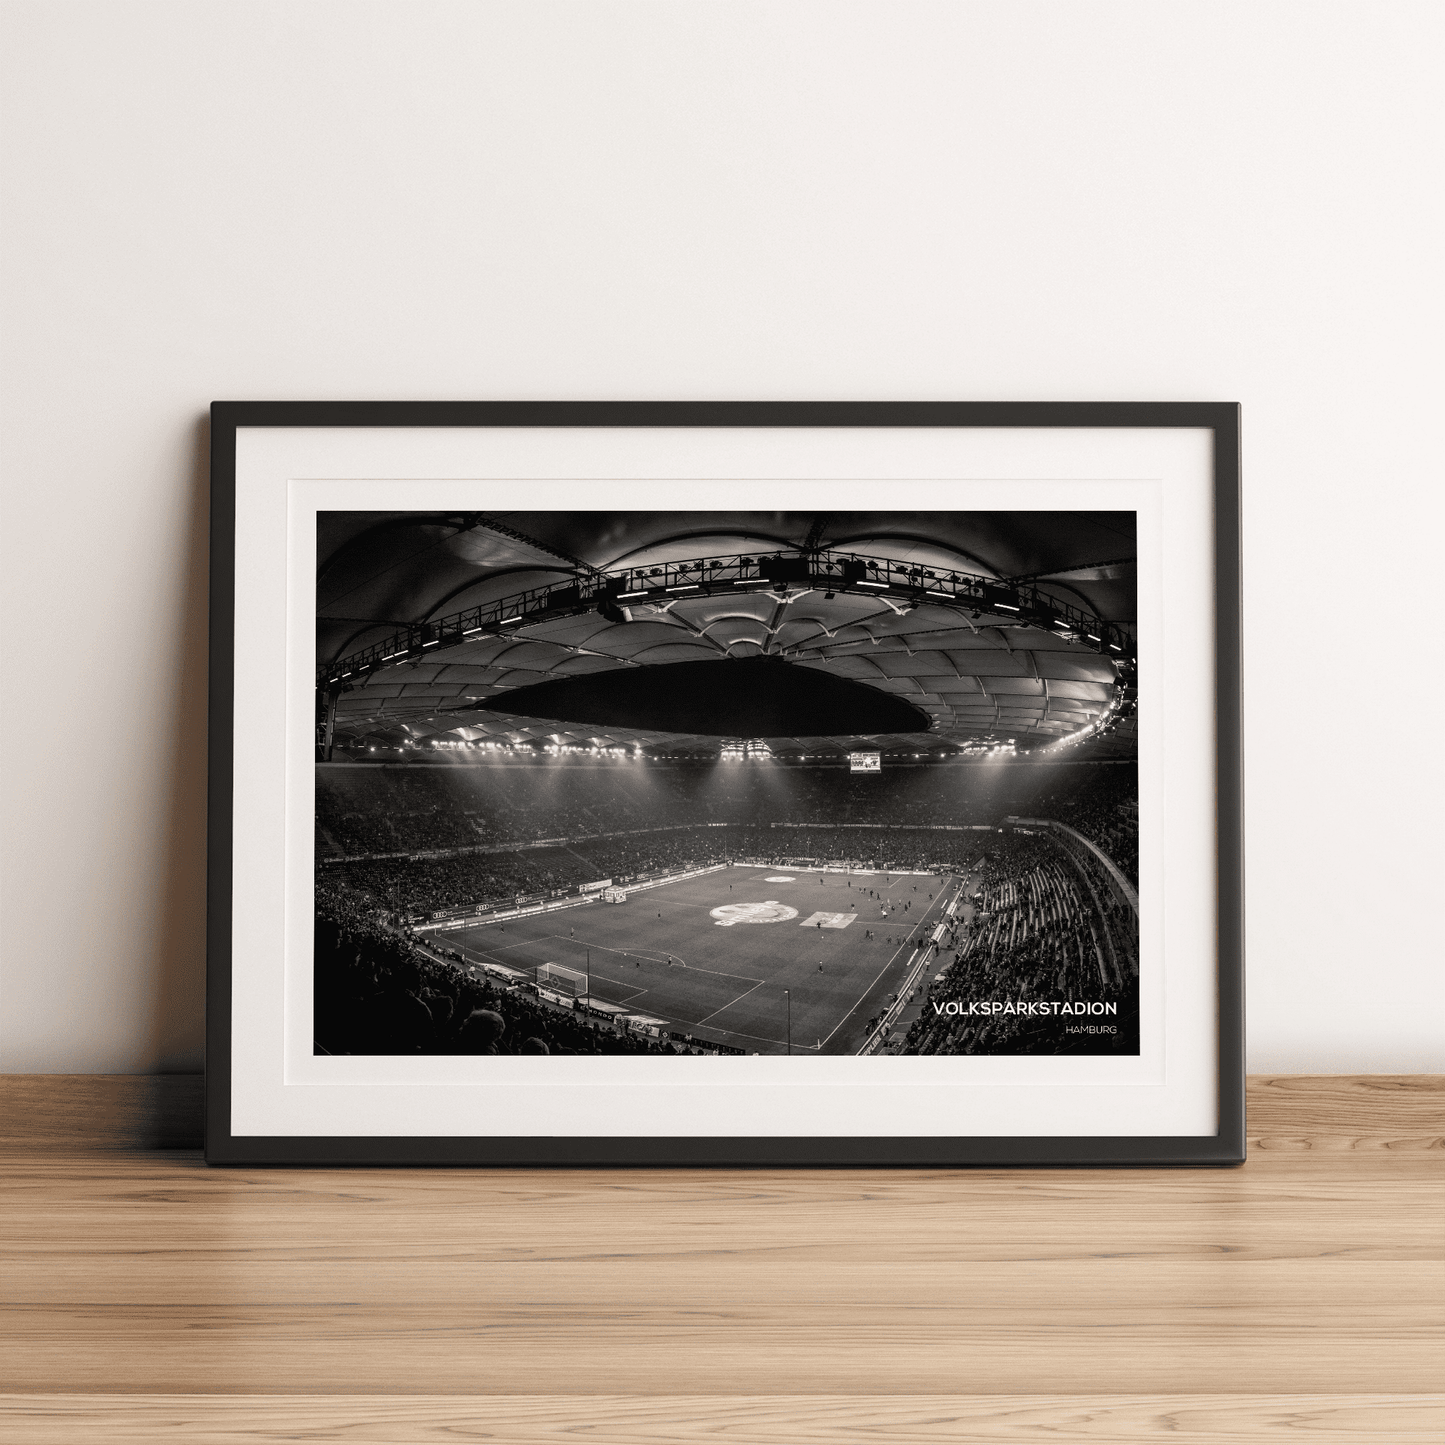 Volksparkstadion Hamburger SV Stadium Photography Print